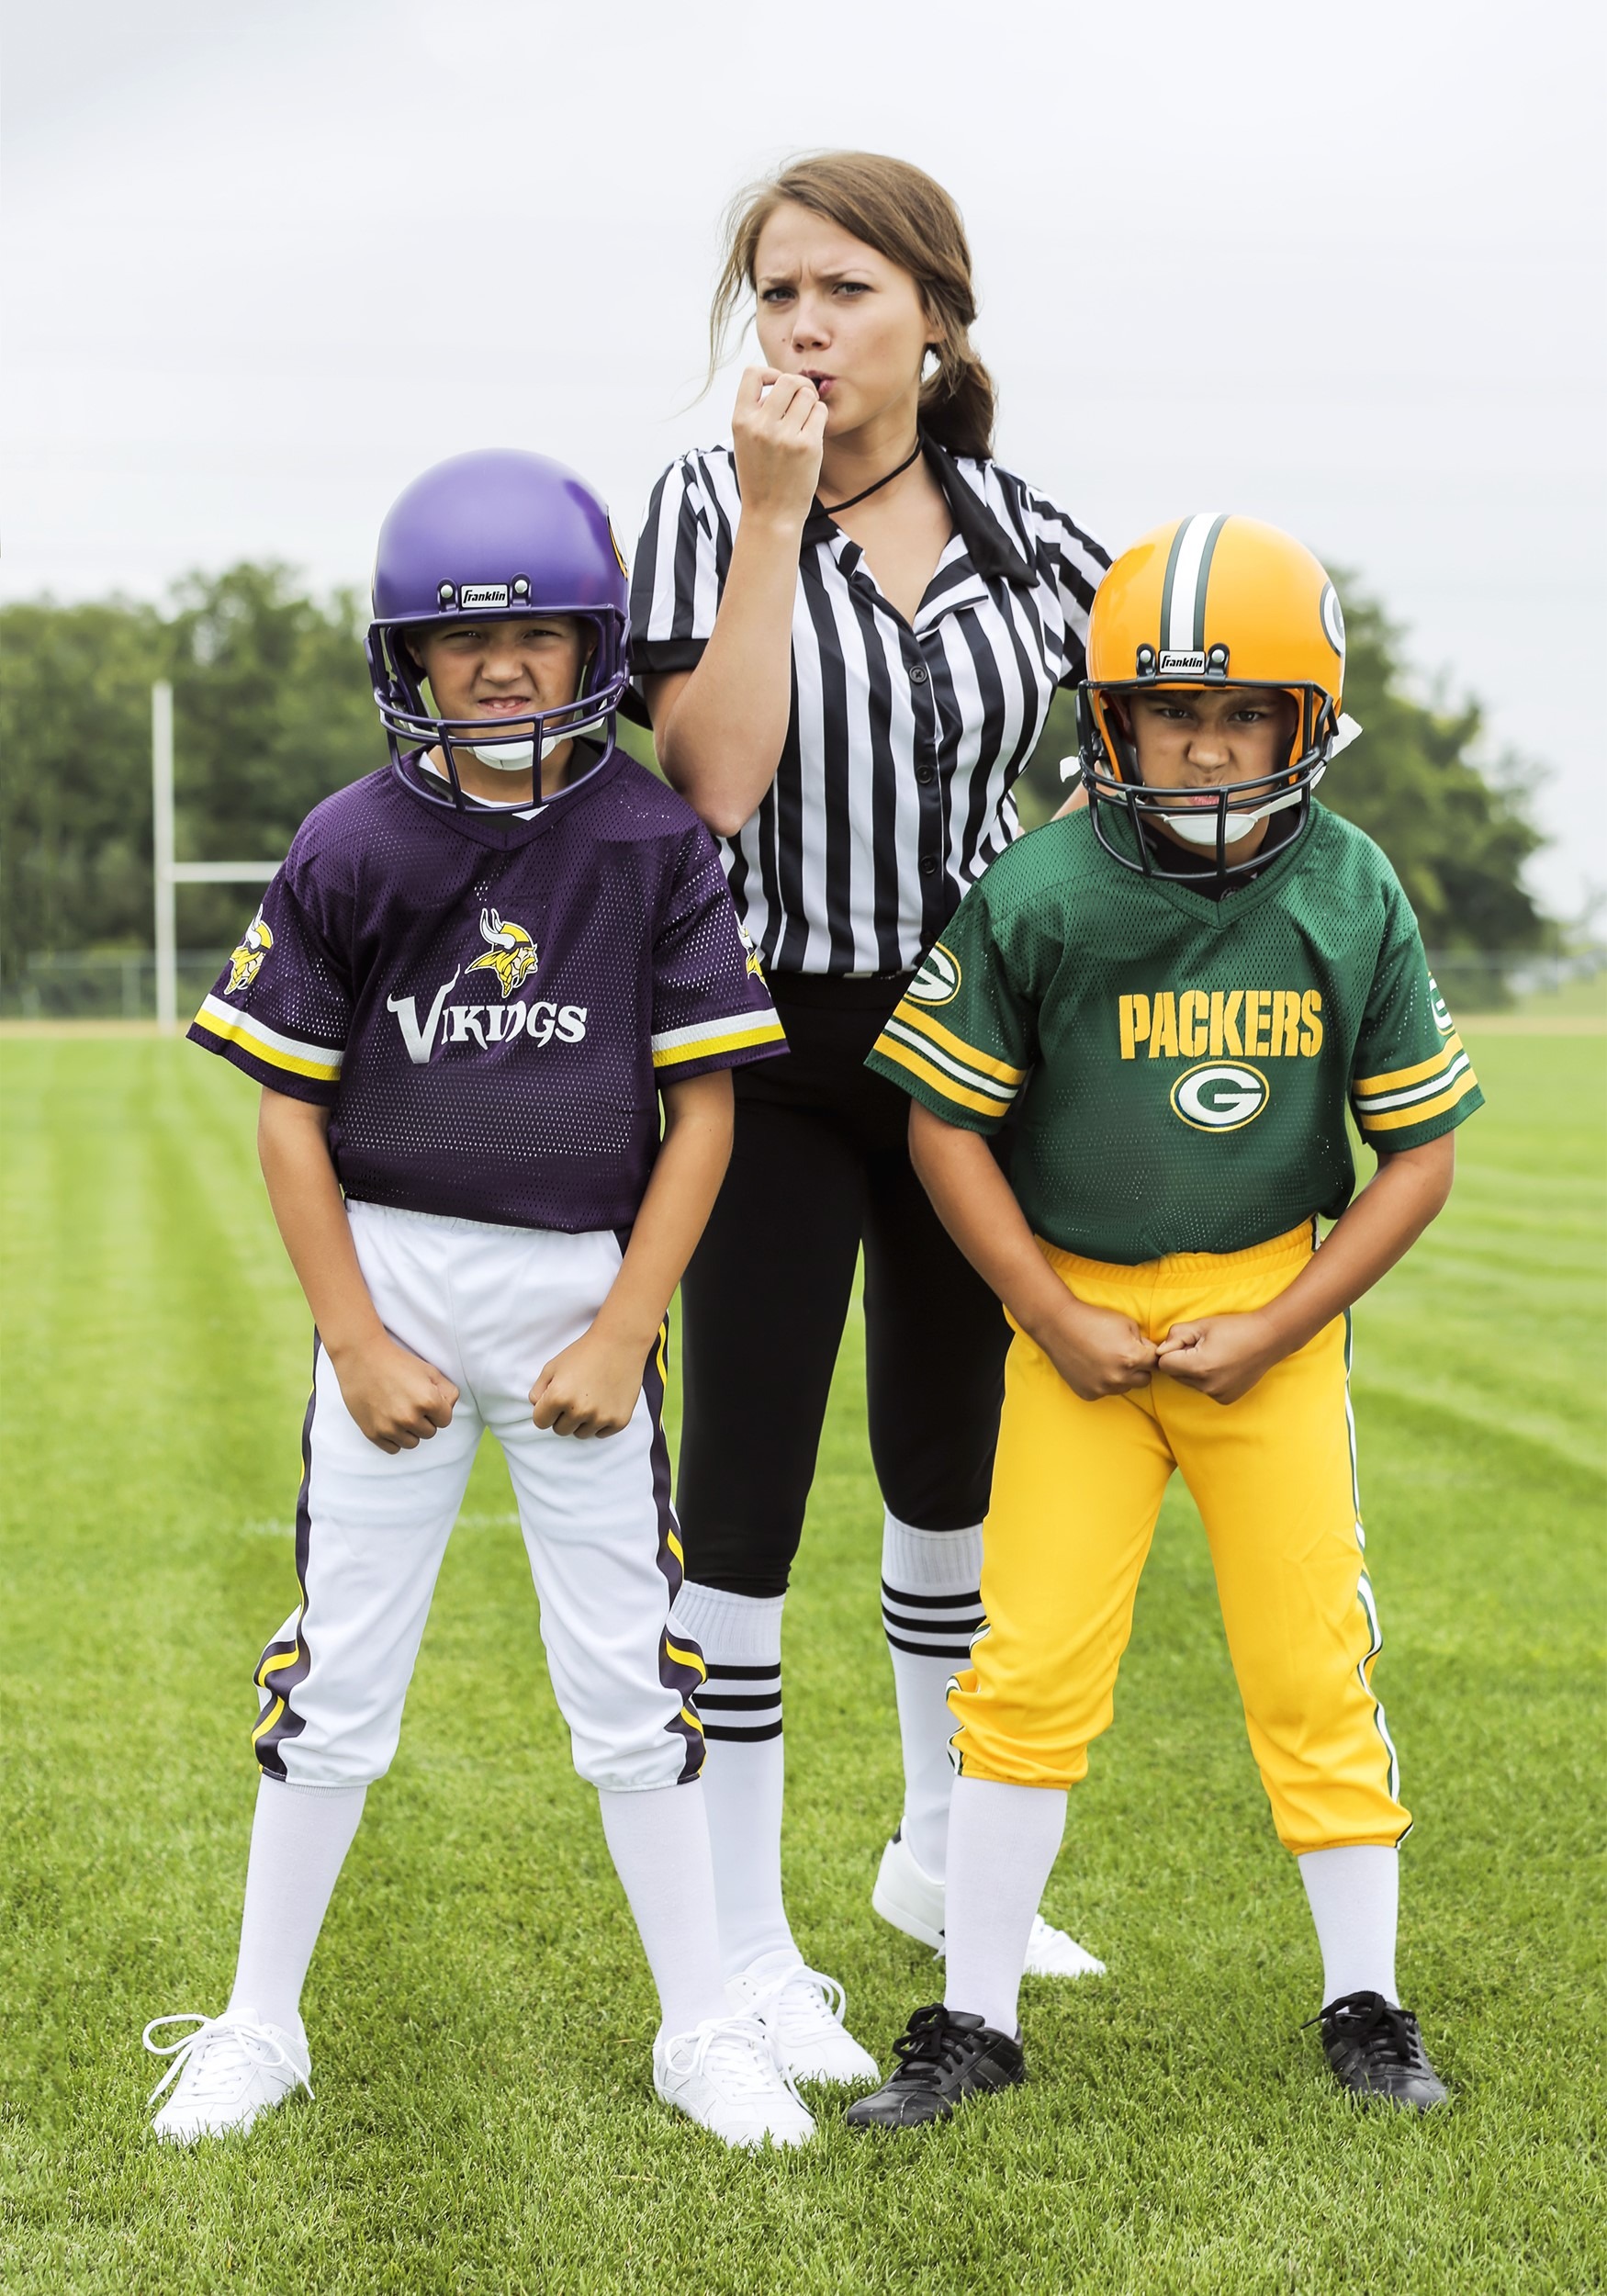 Packers NFL Kid's Uniform Costume